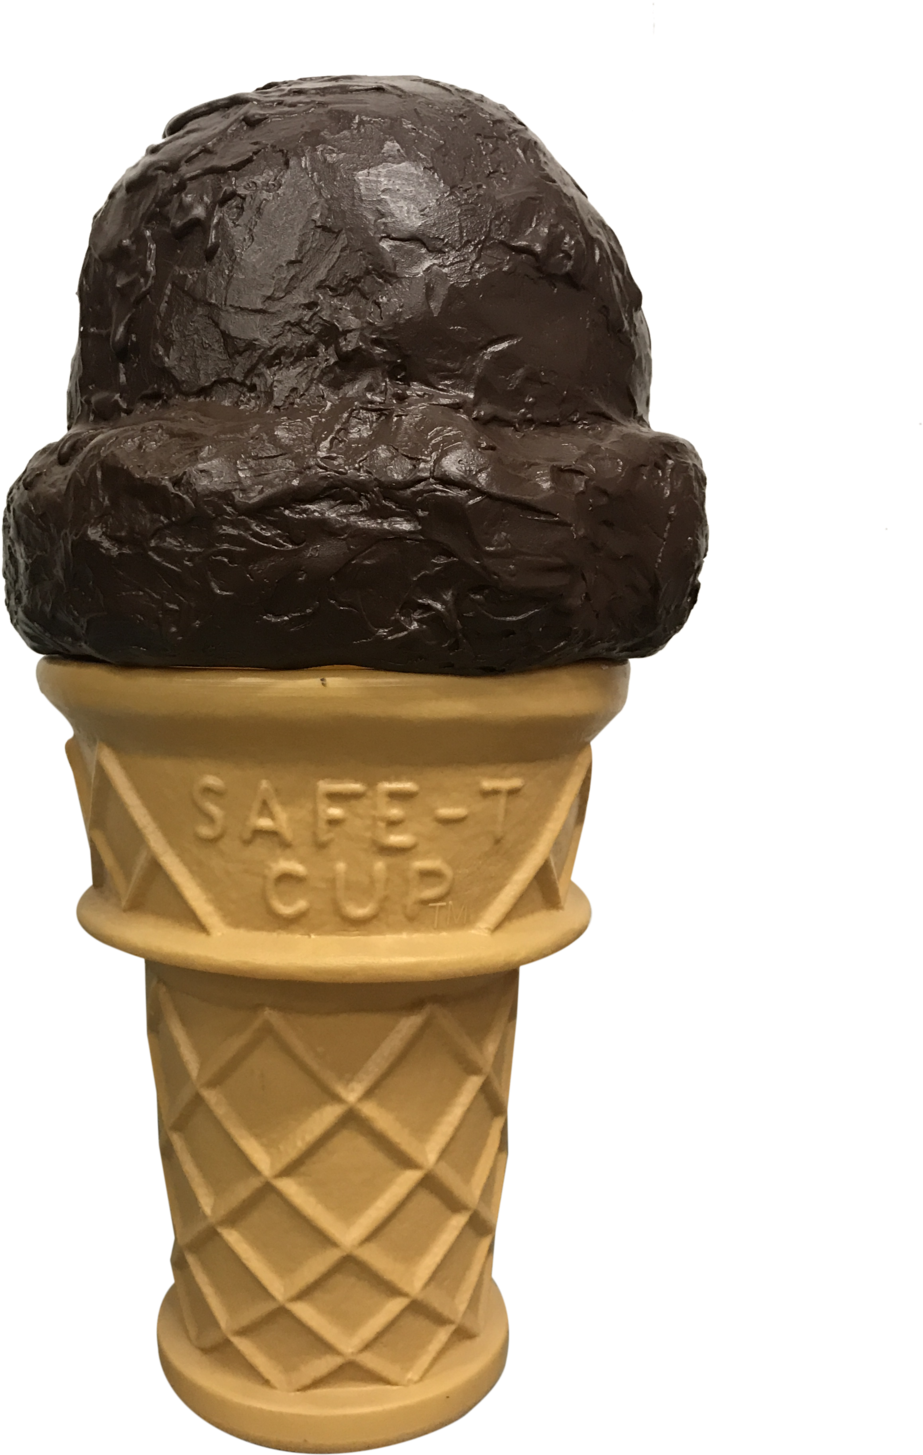 Chocolate Ice Cream Cone S A F T C U P PNG image